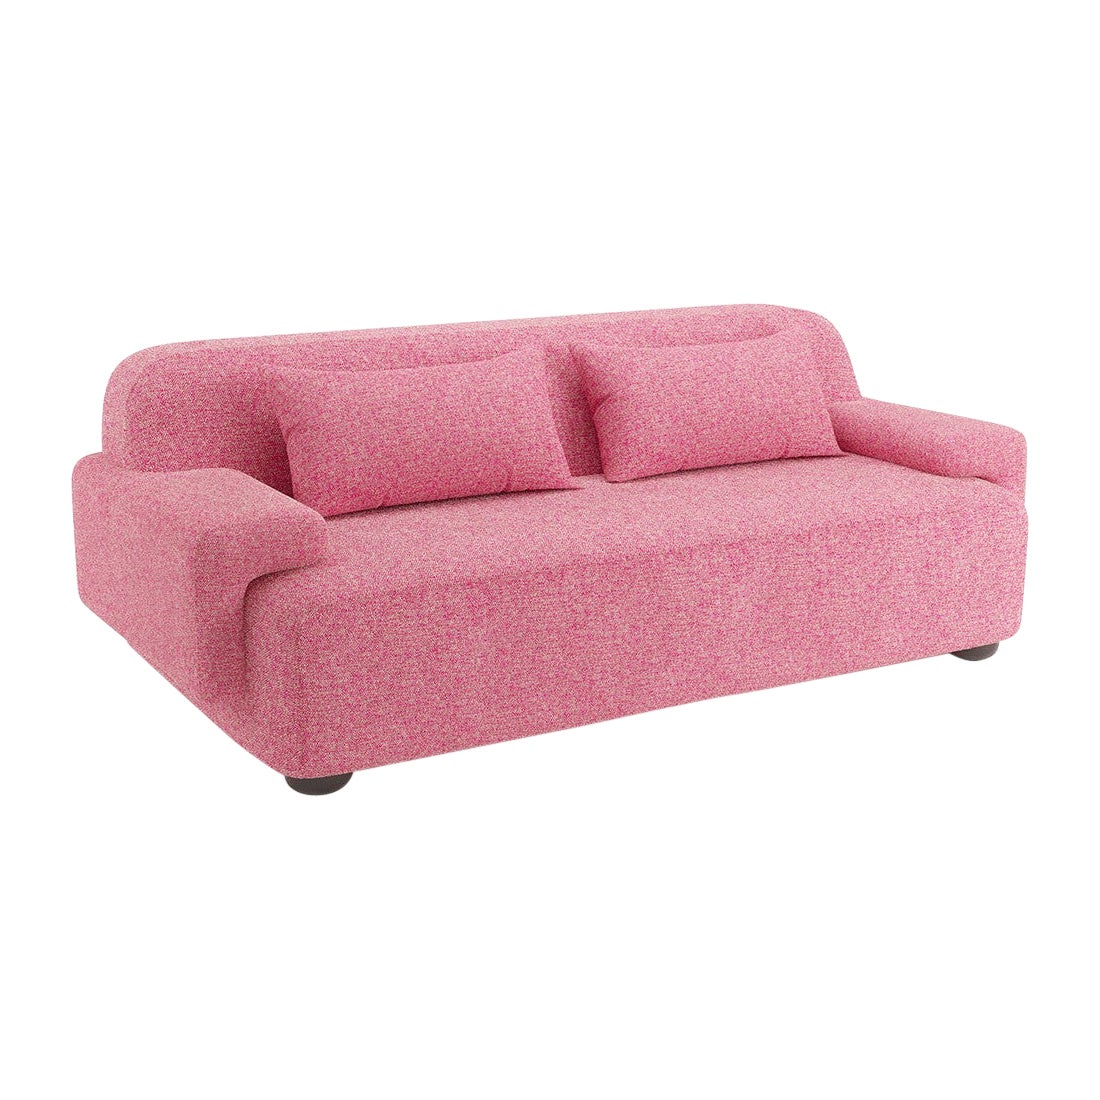 Popus Editions Lena 2.5 Seater Sofa in Fuschia London Linen Fabric For Sale